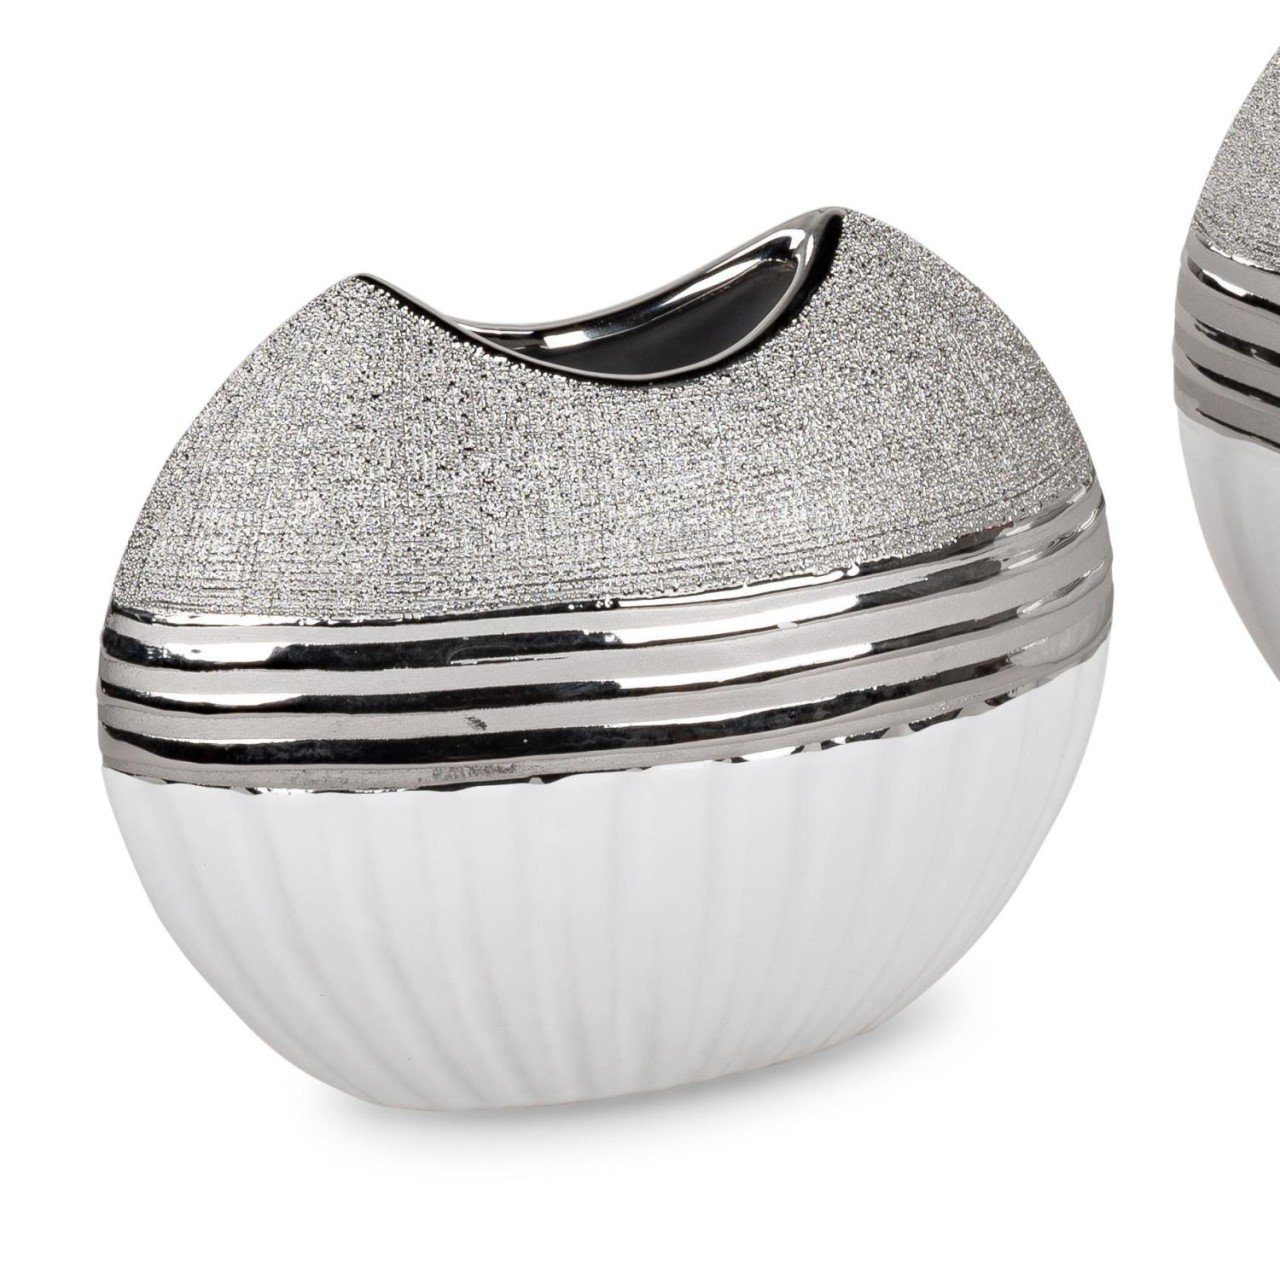 Small-Preis formano Dekovase White Silver, Silber L:20cm B:10cm H:17cm Keramik